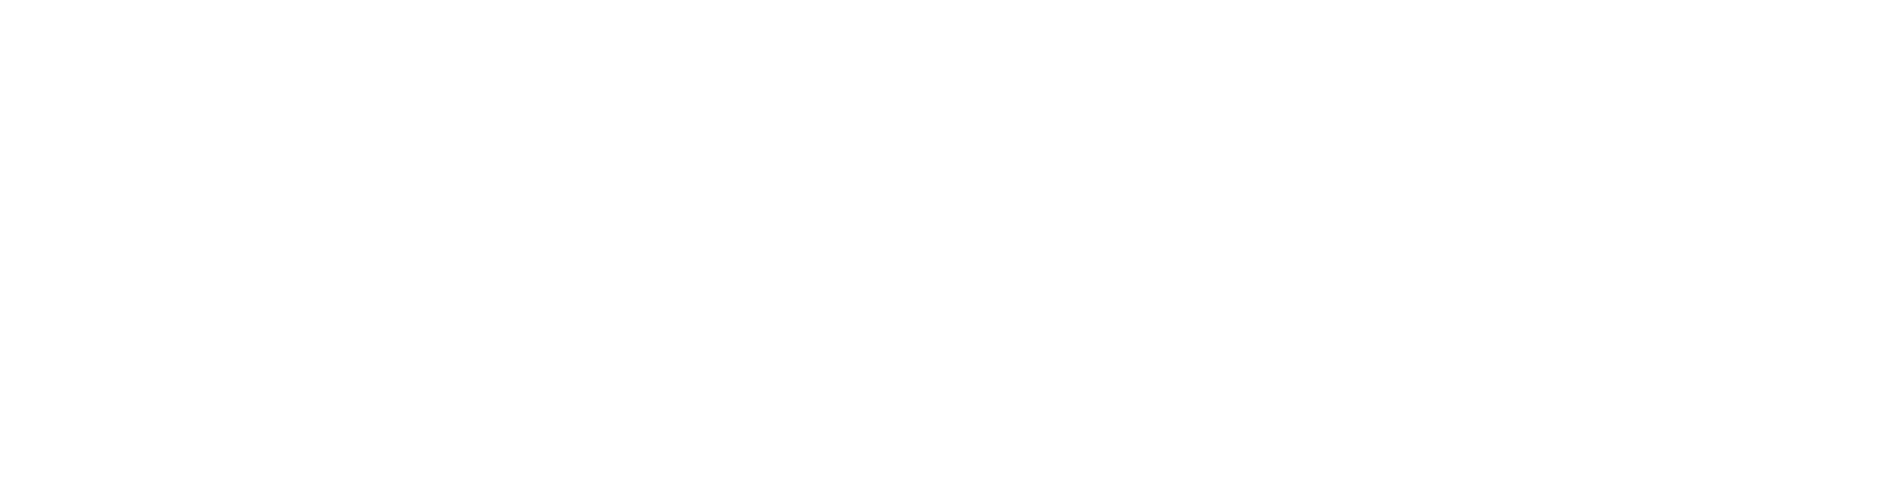 Adobe_white_logo